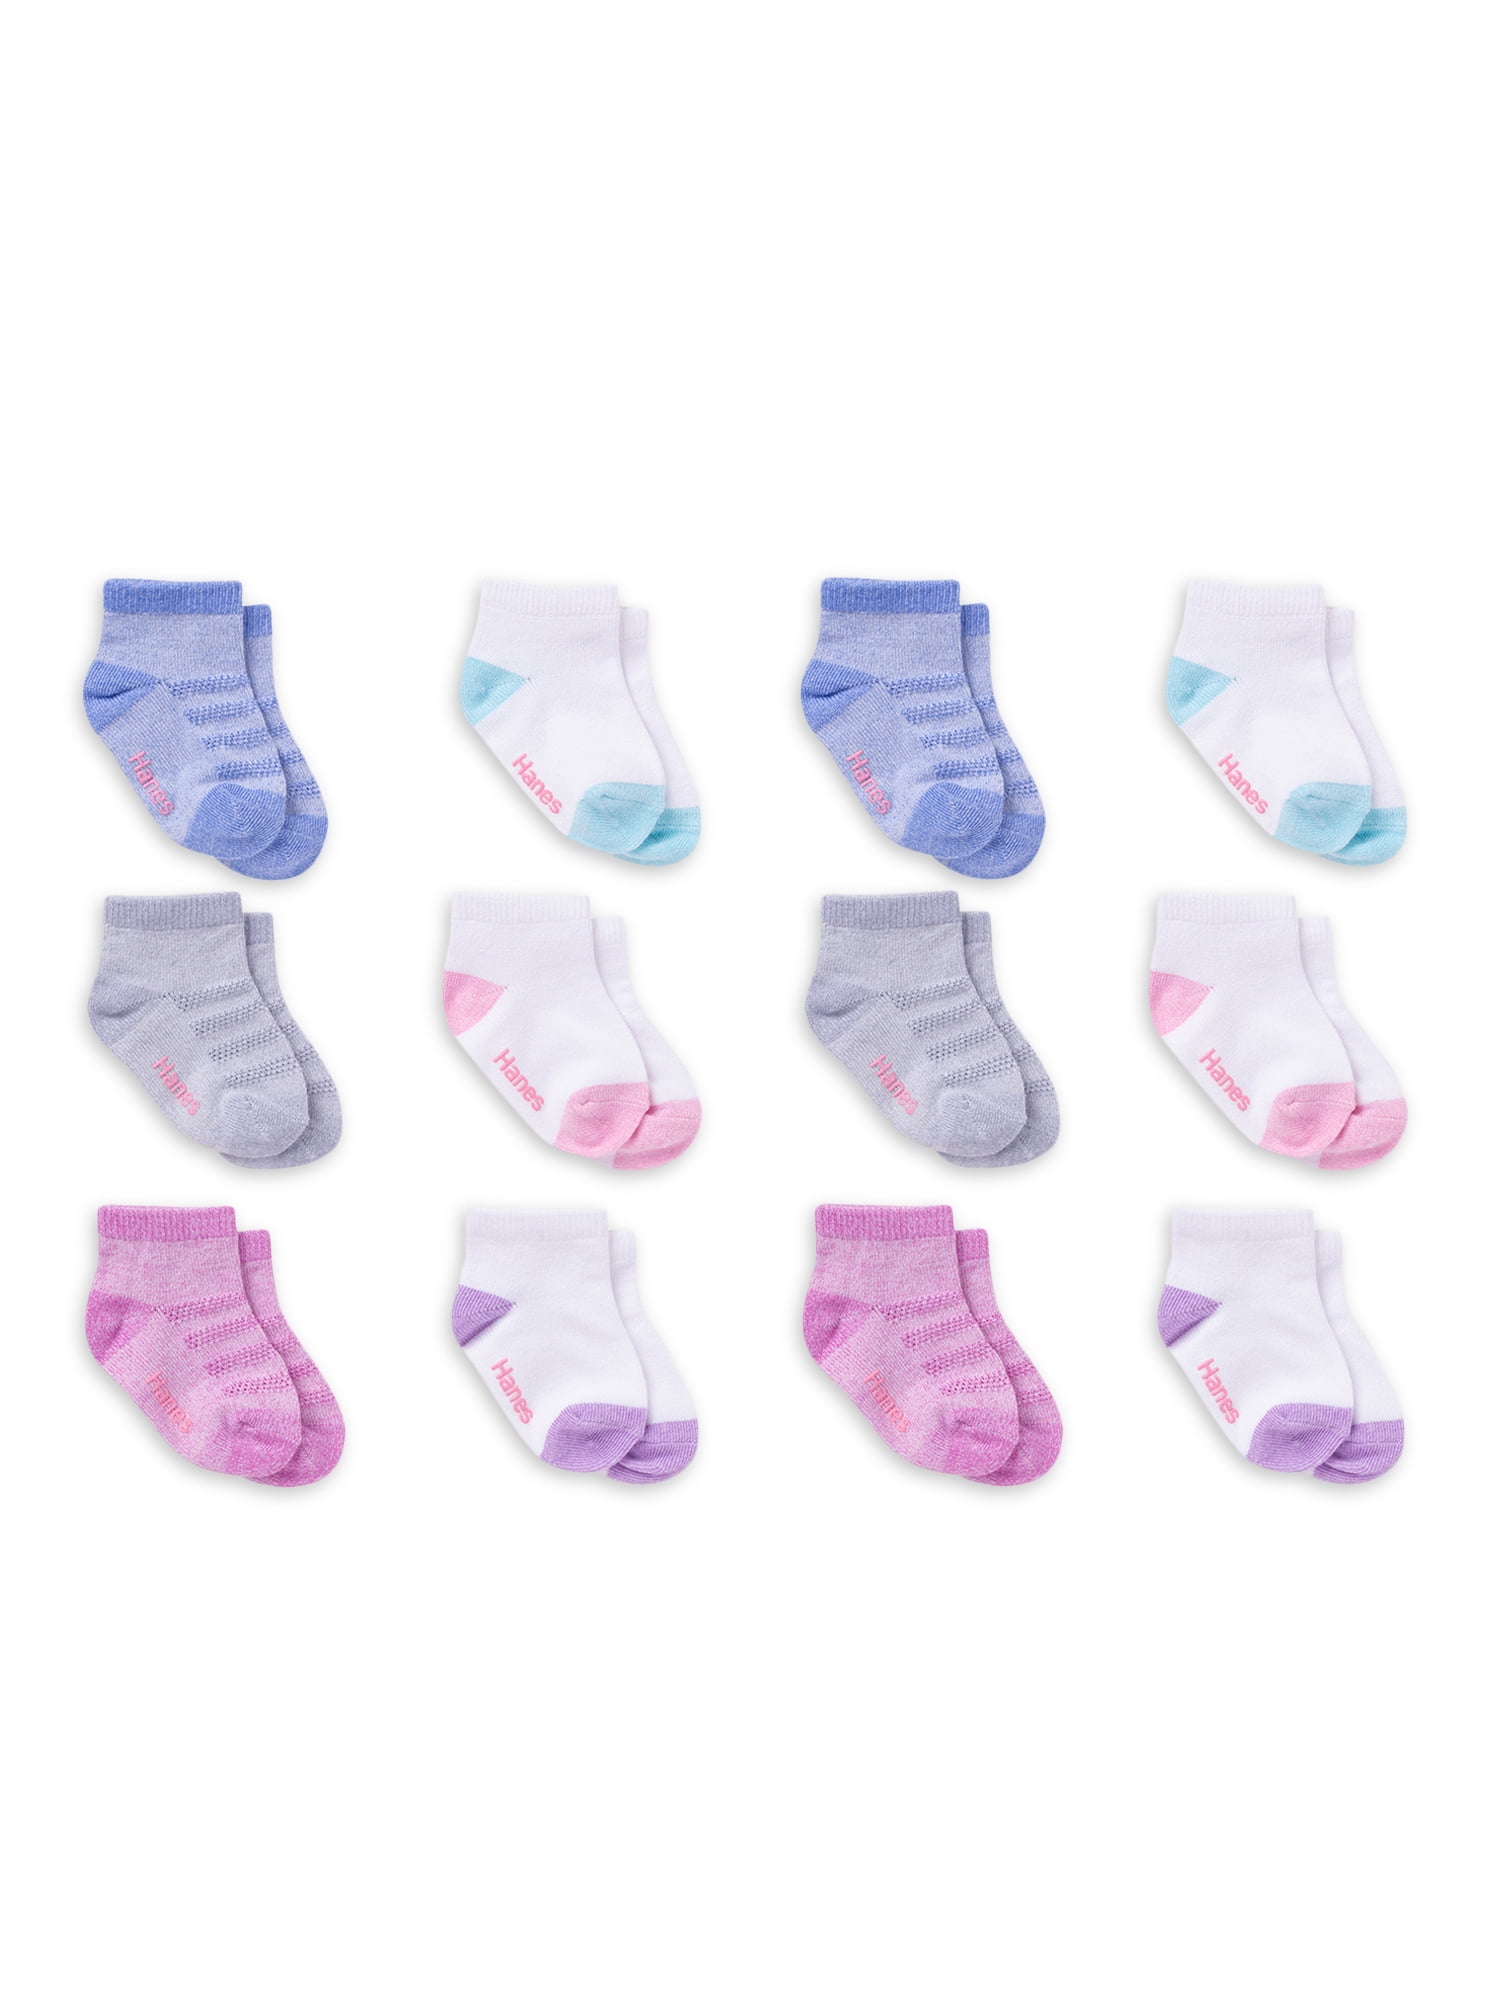 Handmade Royal blue trim frilly socks baby/girls wedding school various sizes 